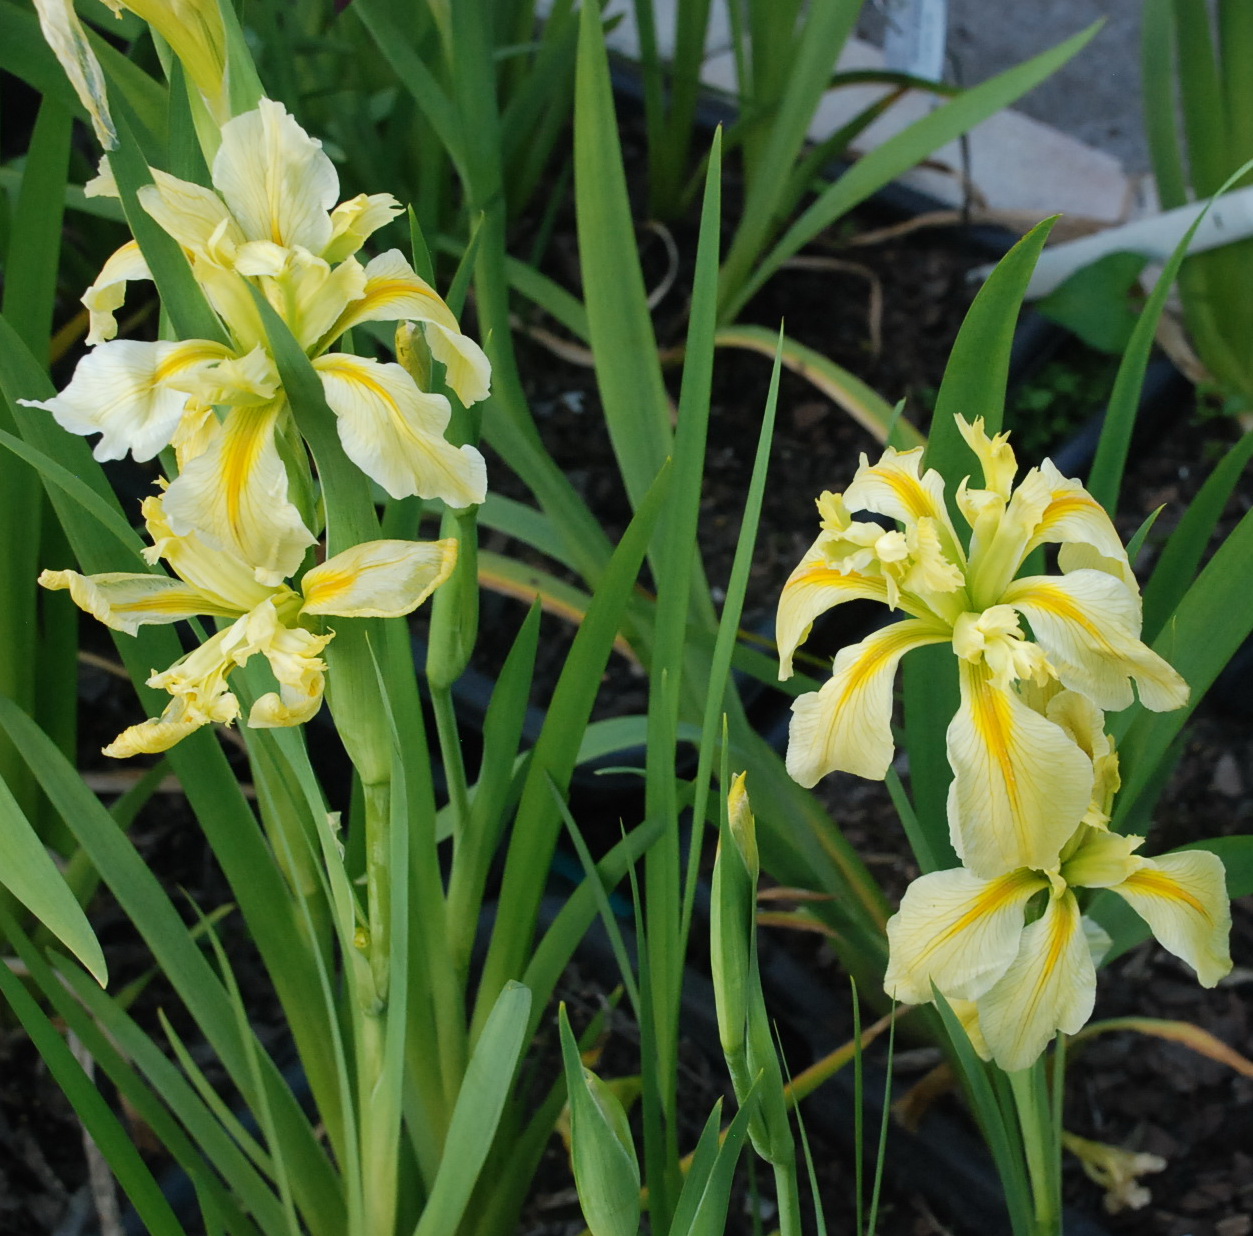 World of Irises: Louisiana Irises That Make Me Happy